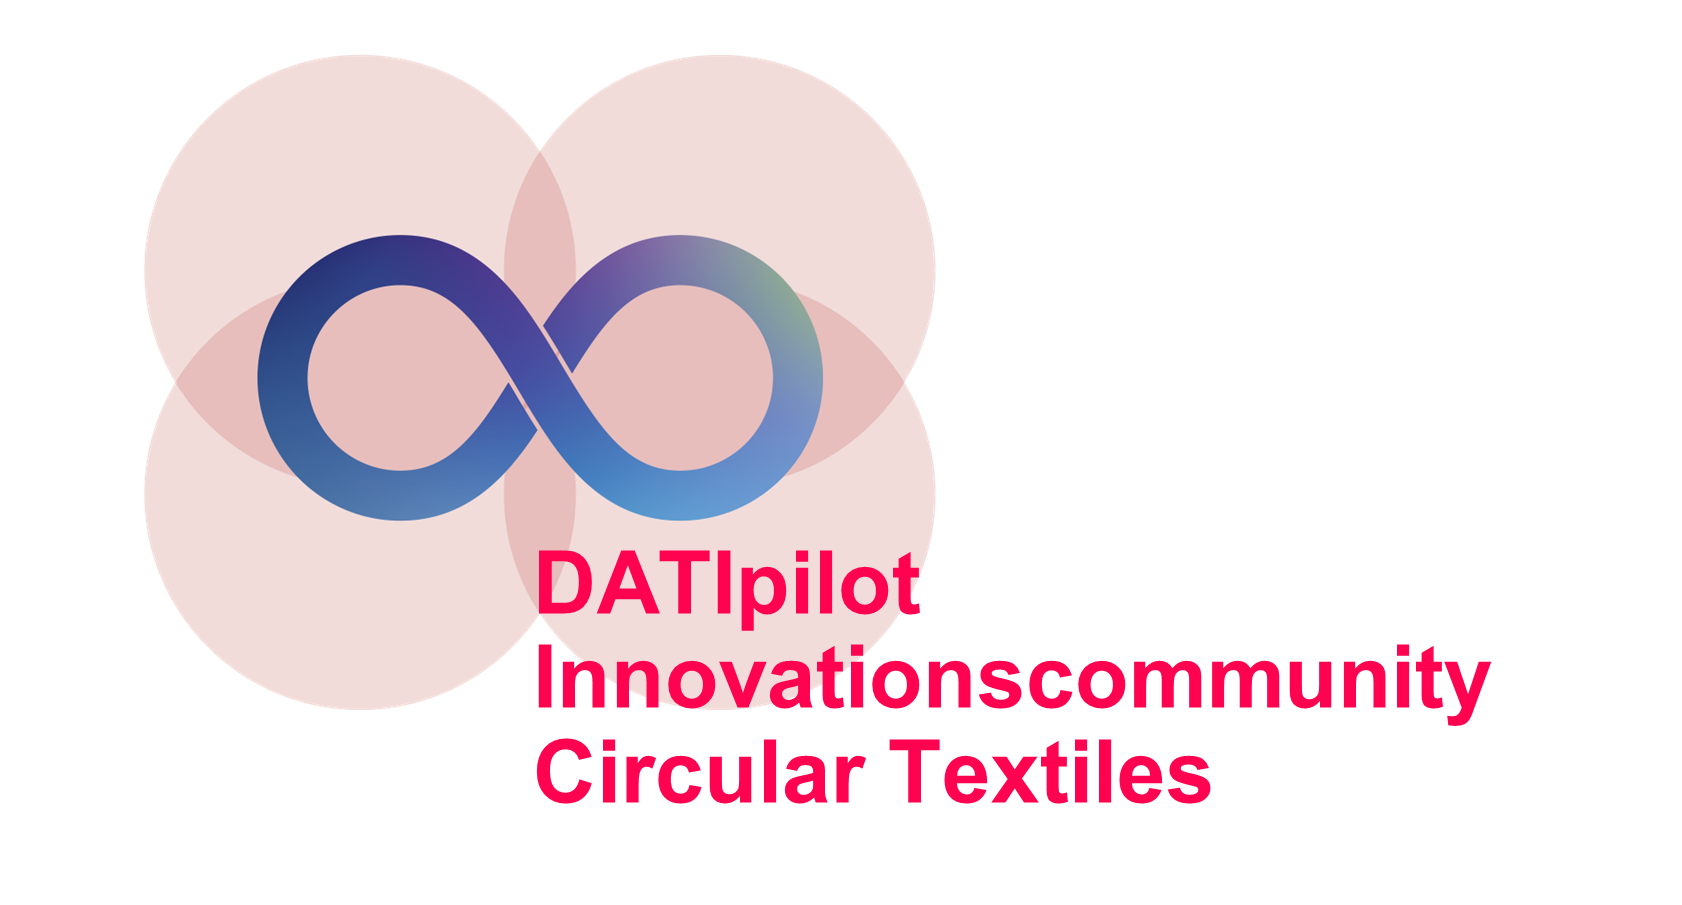 Innovationscommunity Circular Textiles